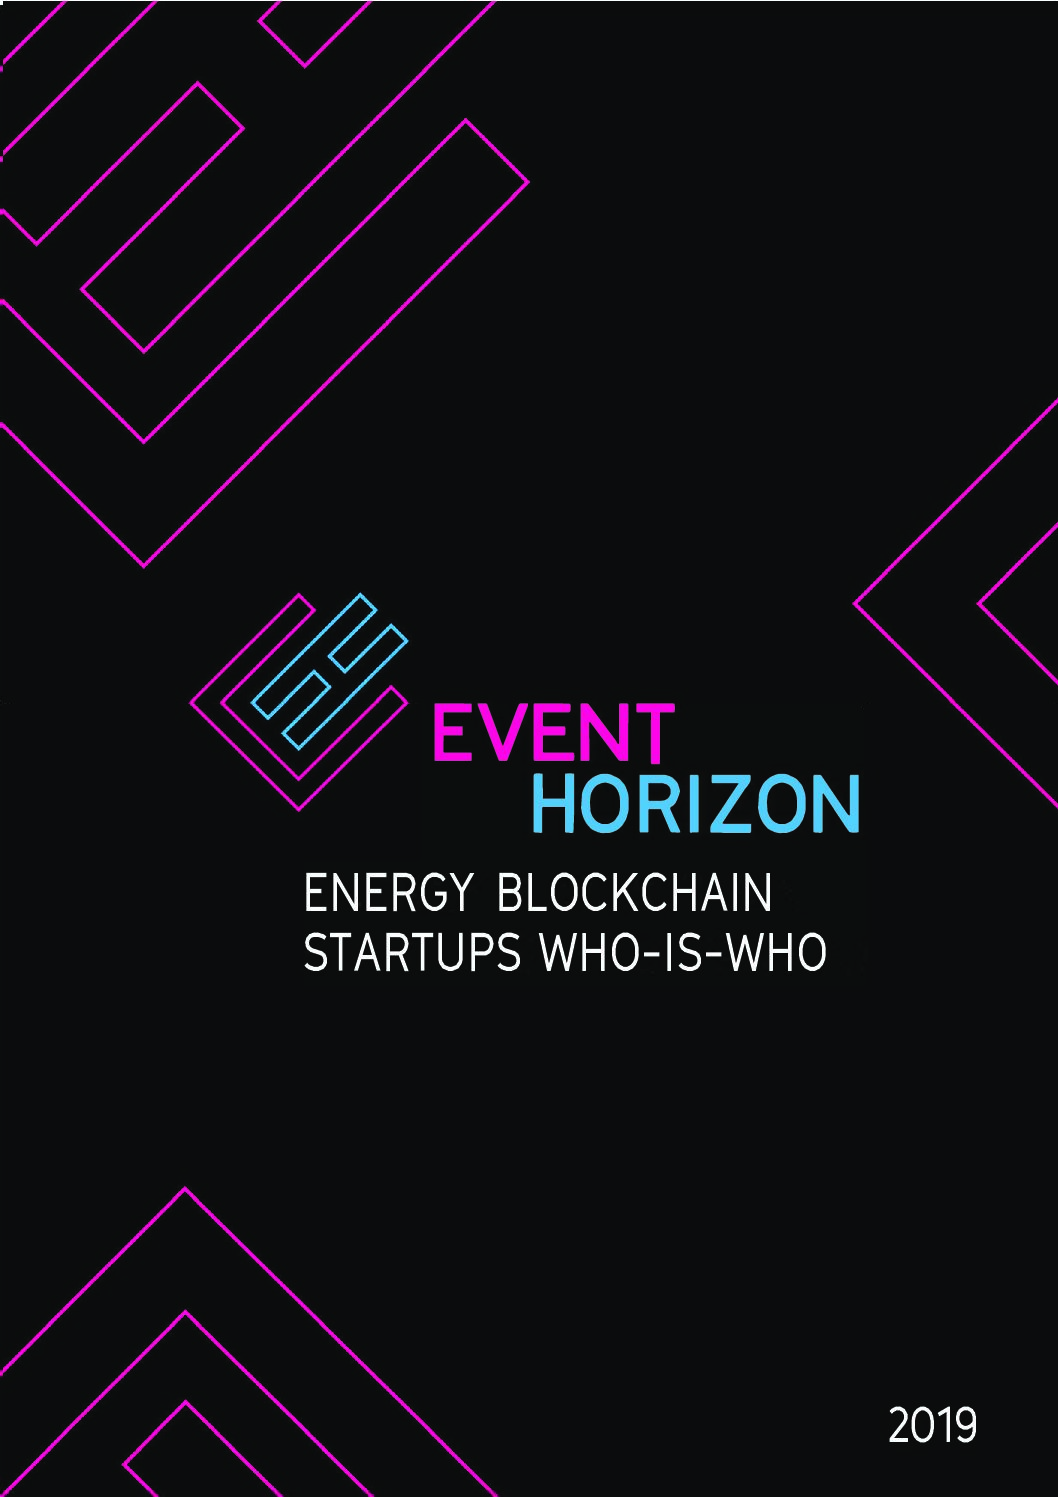 EVENT HORIZON – ENERGY BLOCKCHAIN STARTUPS WHO-IS-WHO